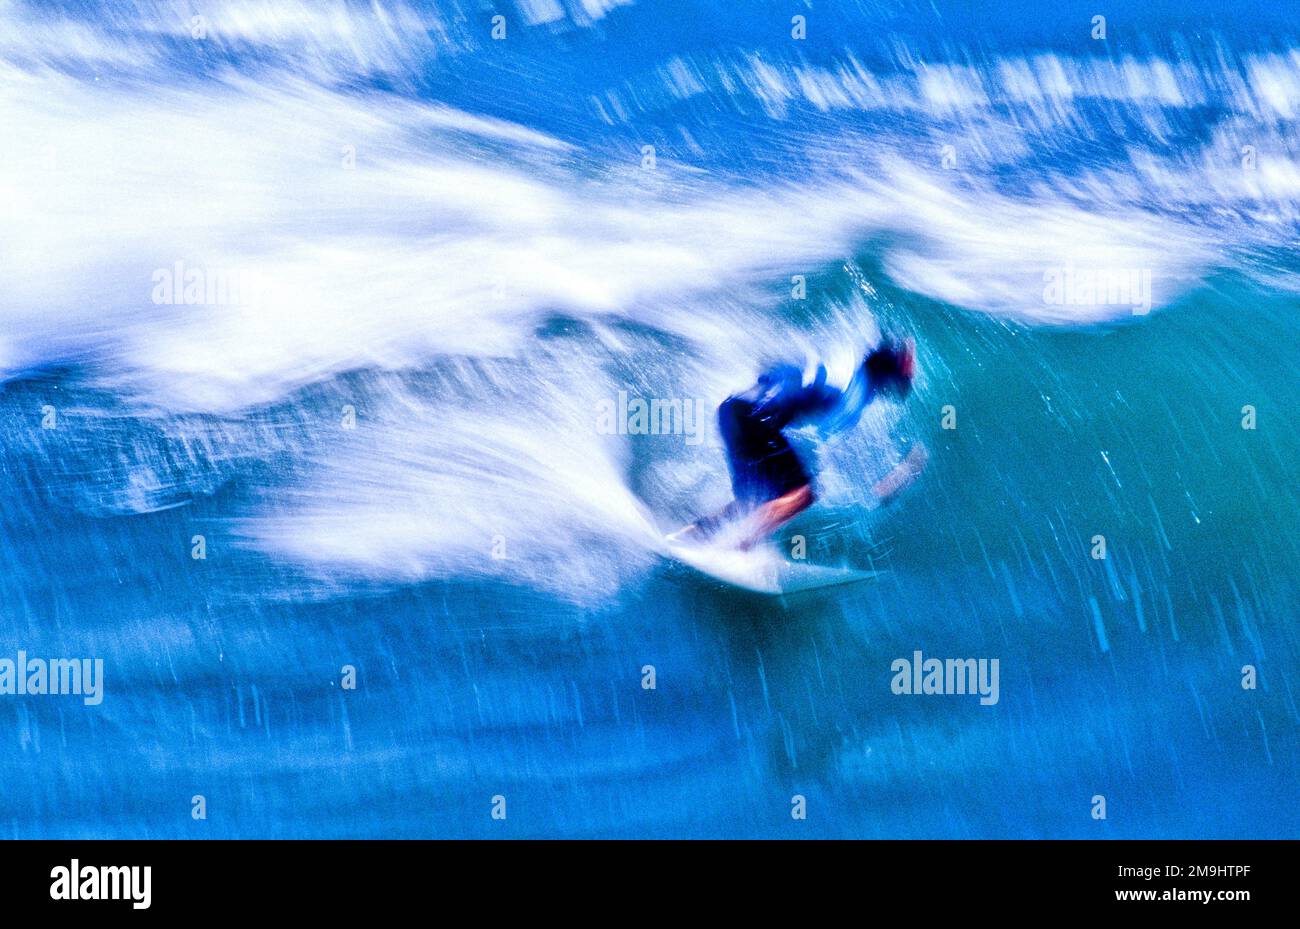 Surfer on surfboard on sea wave, California, USA Stock Photo